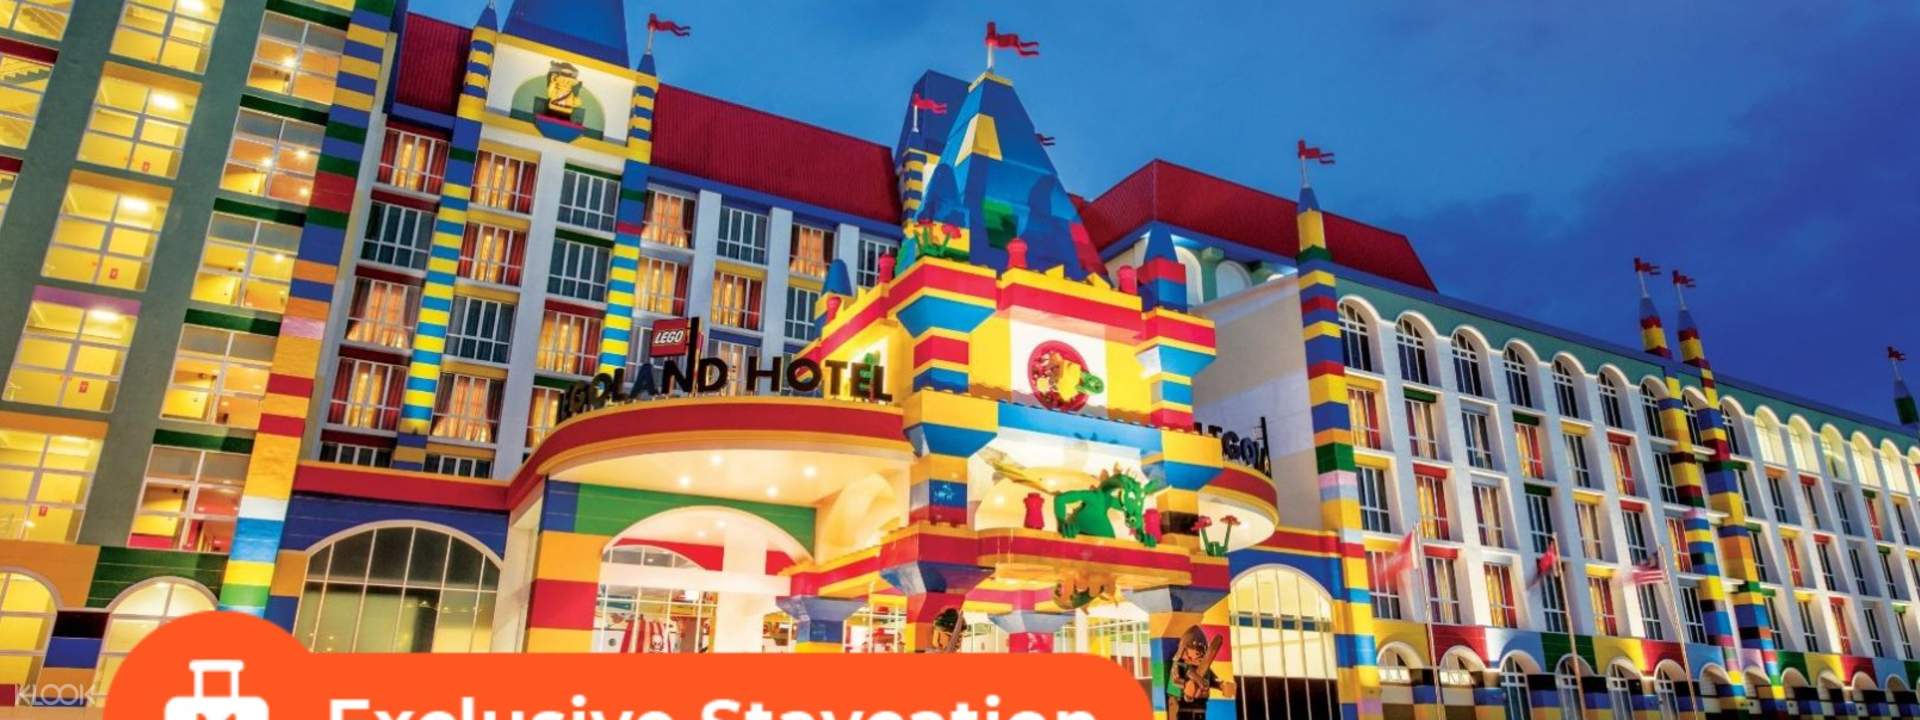 LEGOLAND® Hotel Malaysia Experience in Johor Bahru from ...